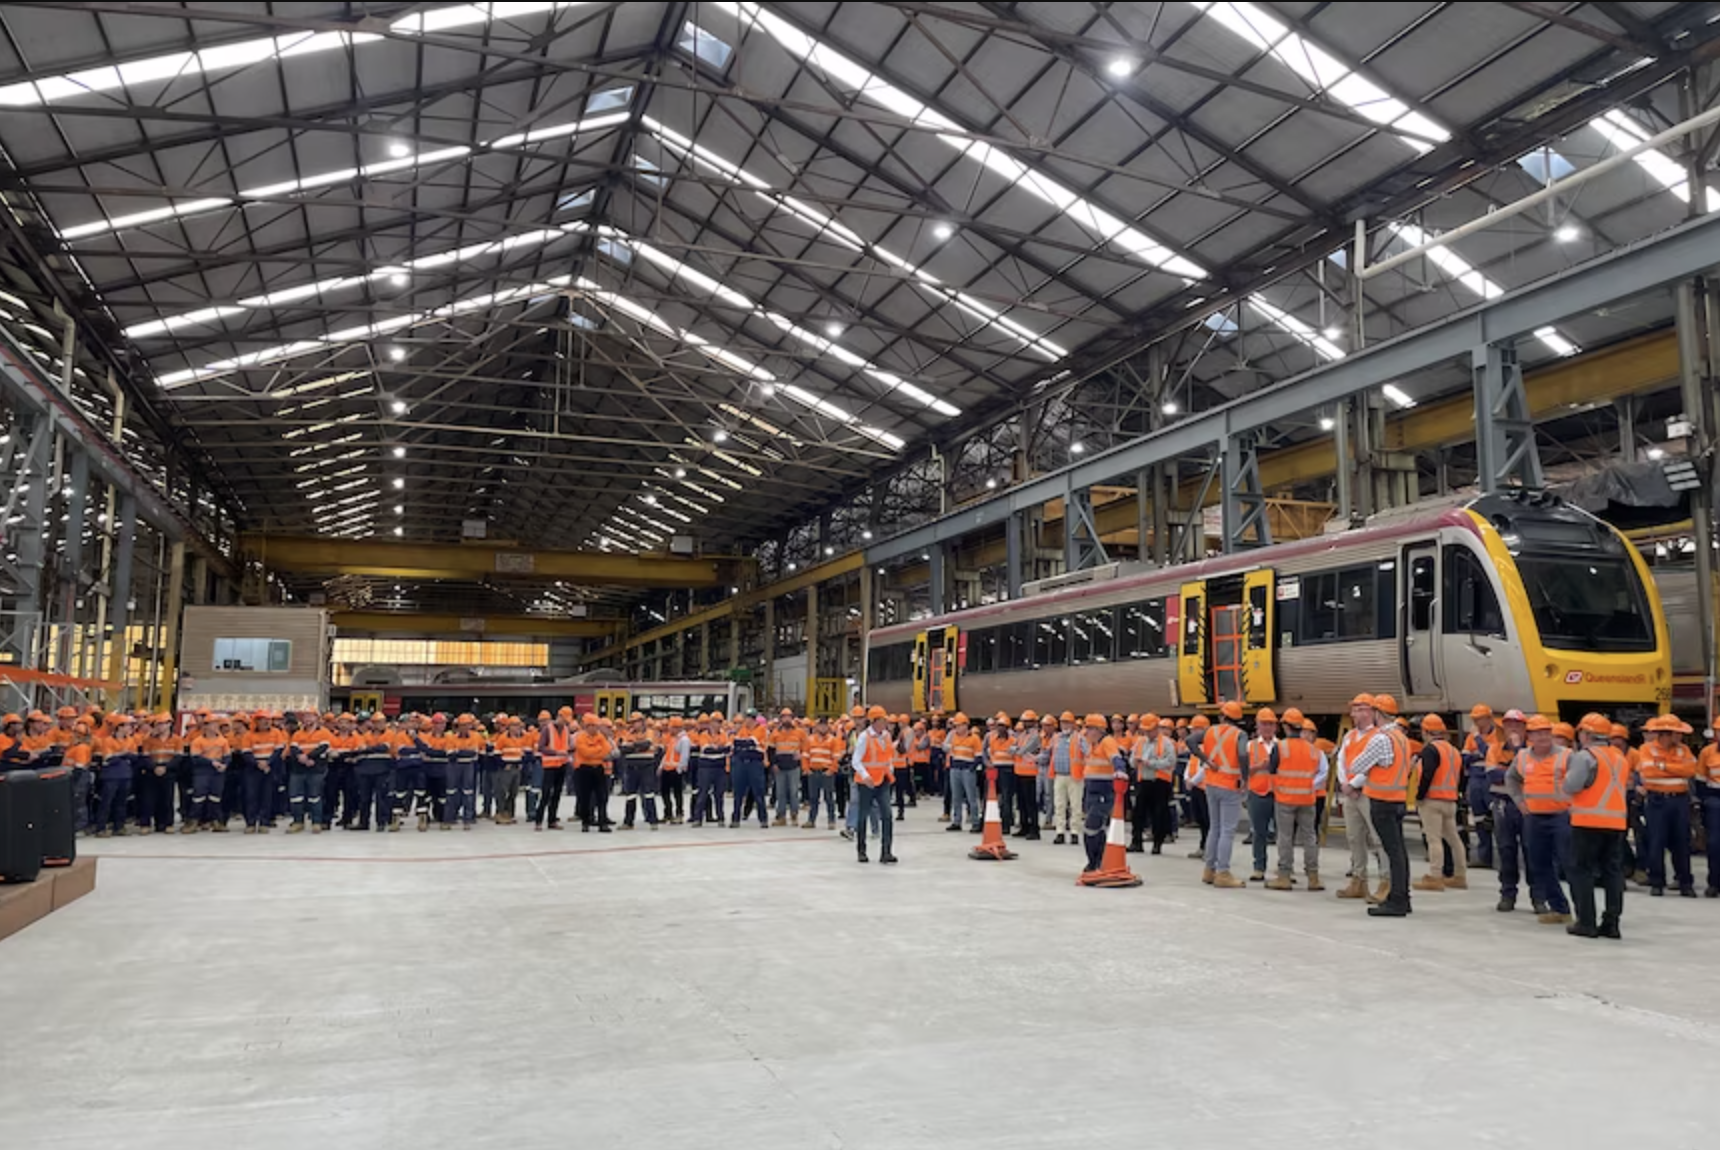 Downer Rail plant in Maryborough, Australia